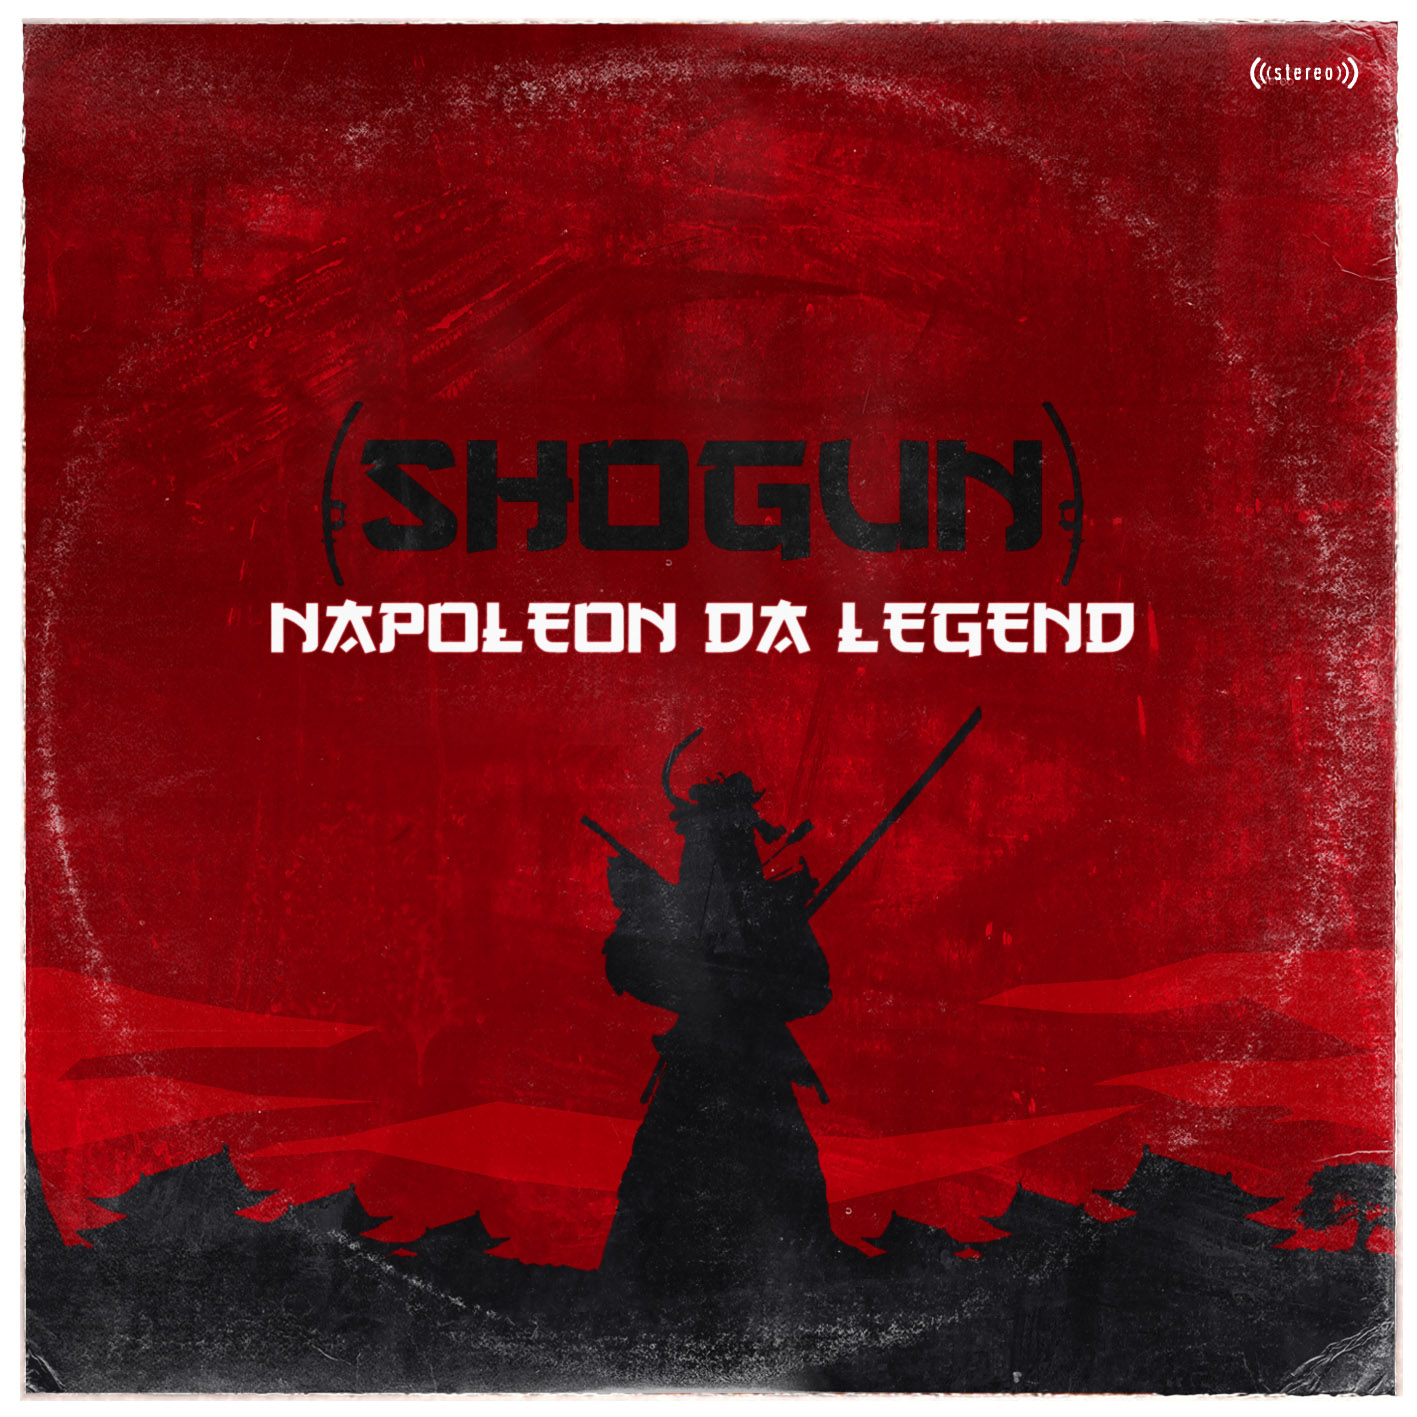 Legend soundtrack. Shogun обложка альбома. Легенда о Наполеоне. Legend Music. Legend песня.